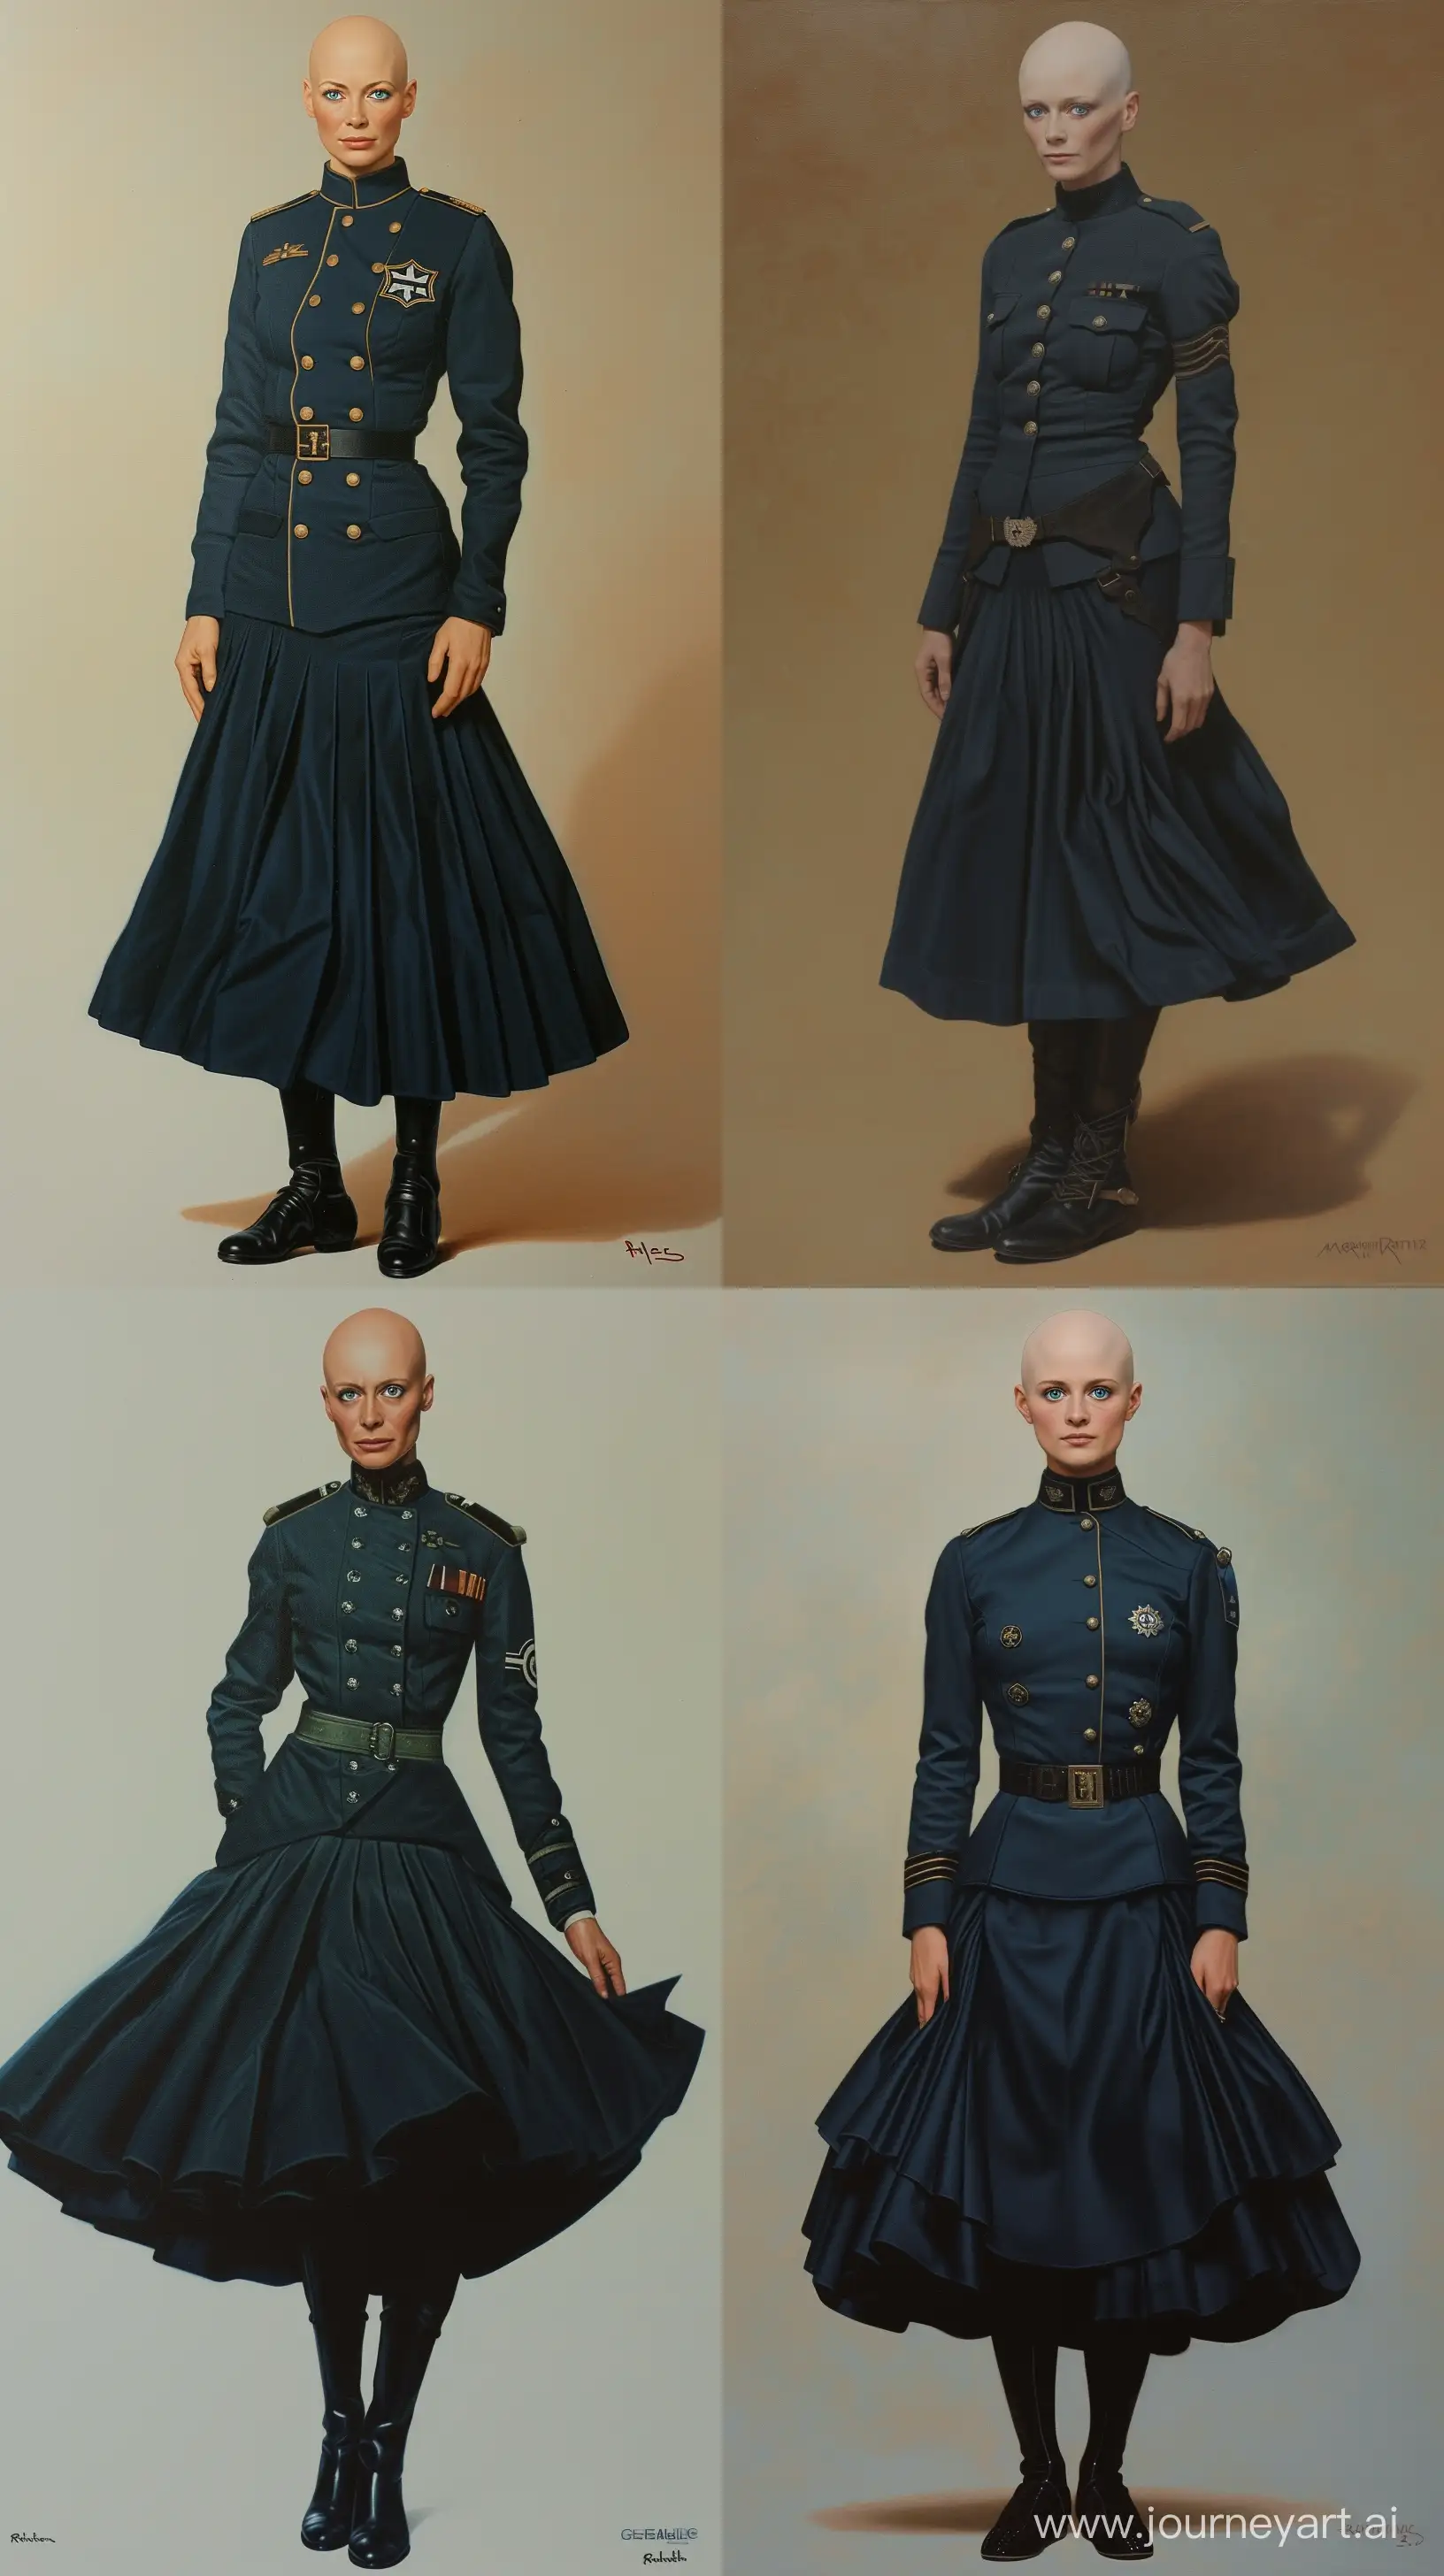 Retro-SciFi-Portrait-Tall-Bald-Gillian-Anderson-in-Dark-Blue-German-Military-Dress-Uniform-by-Ralph-McQuarrie